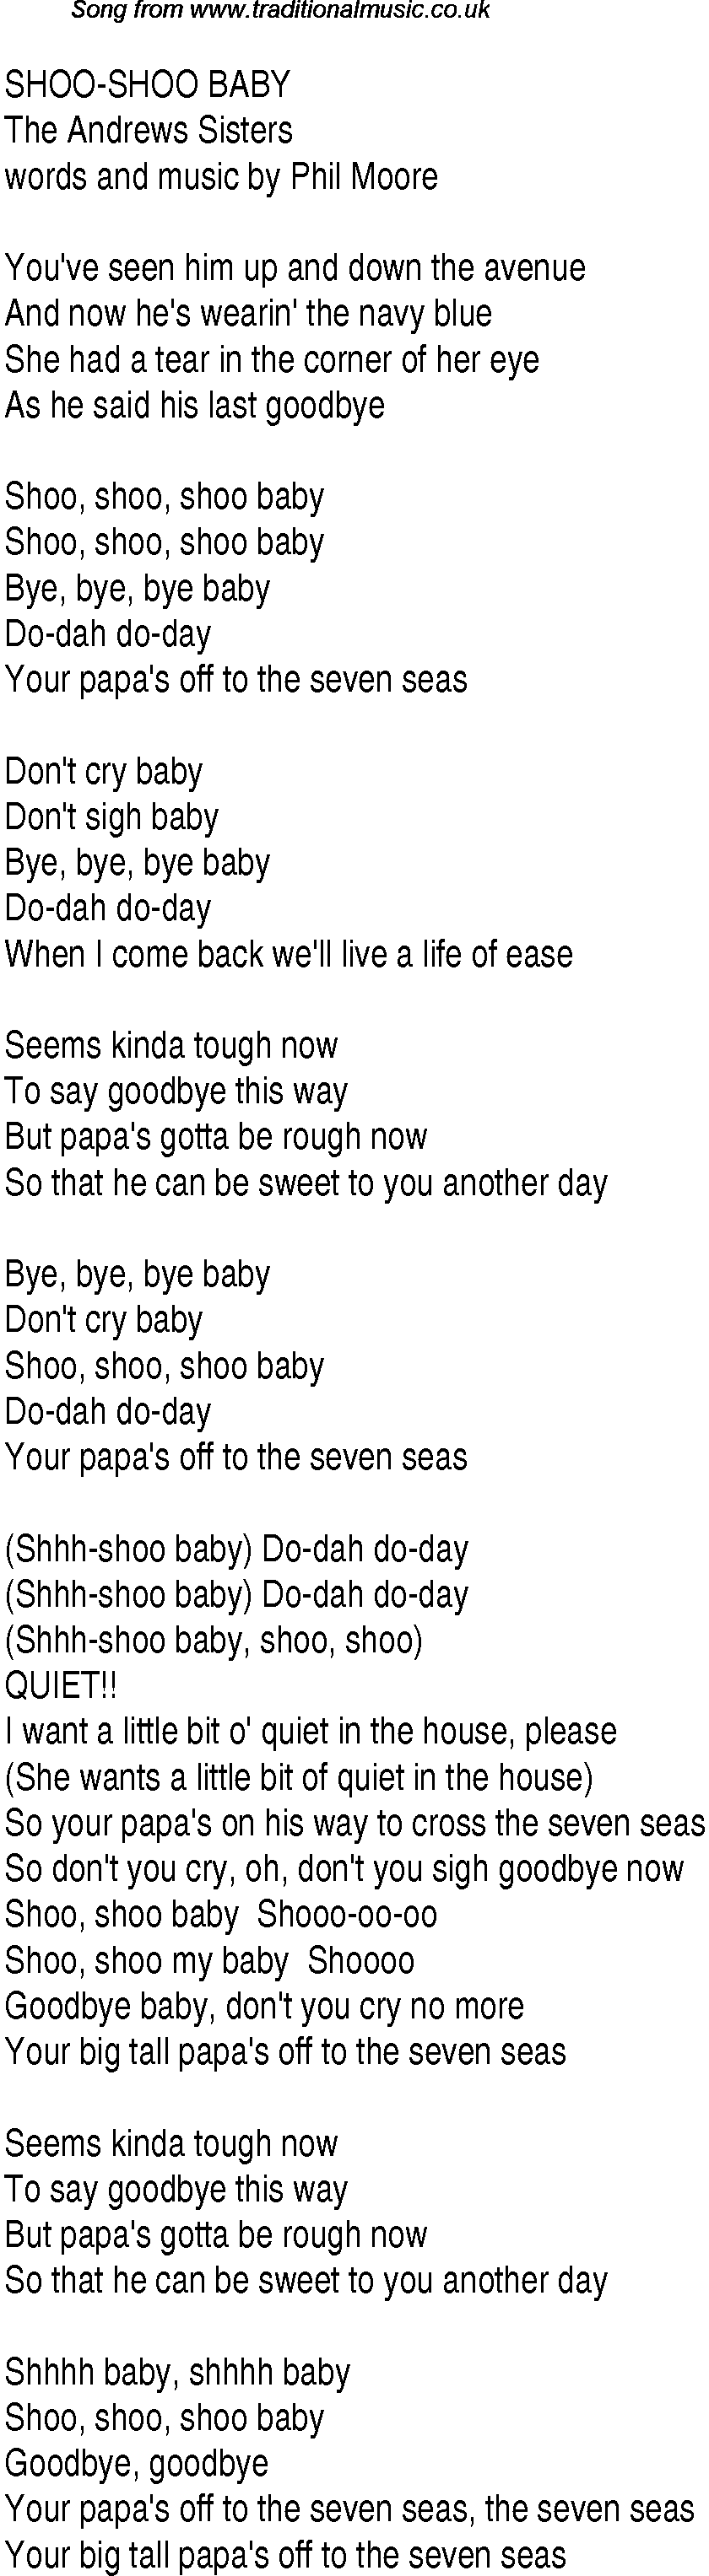 Music charts top songs 1944 - lyrics for Shoo Shoo Baby